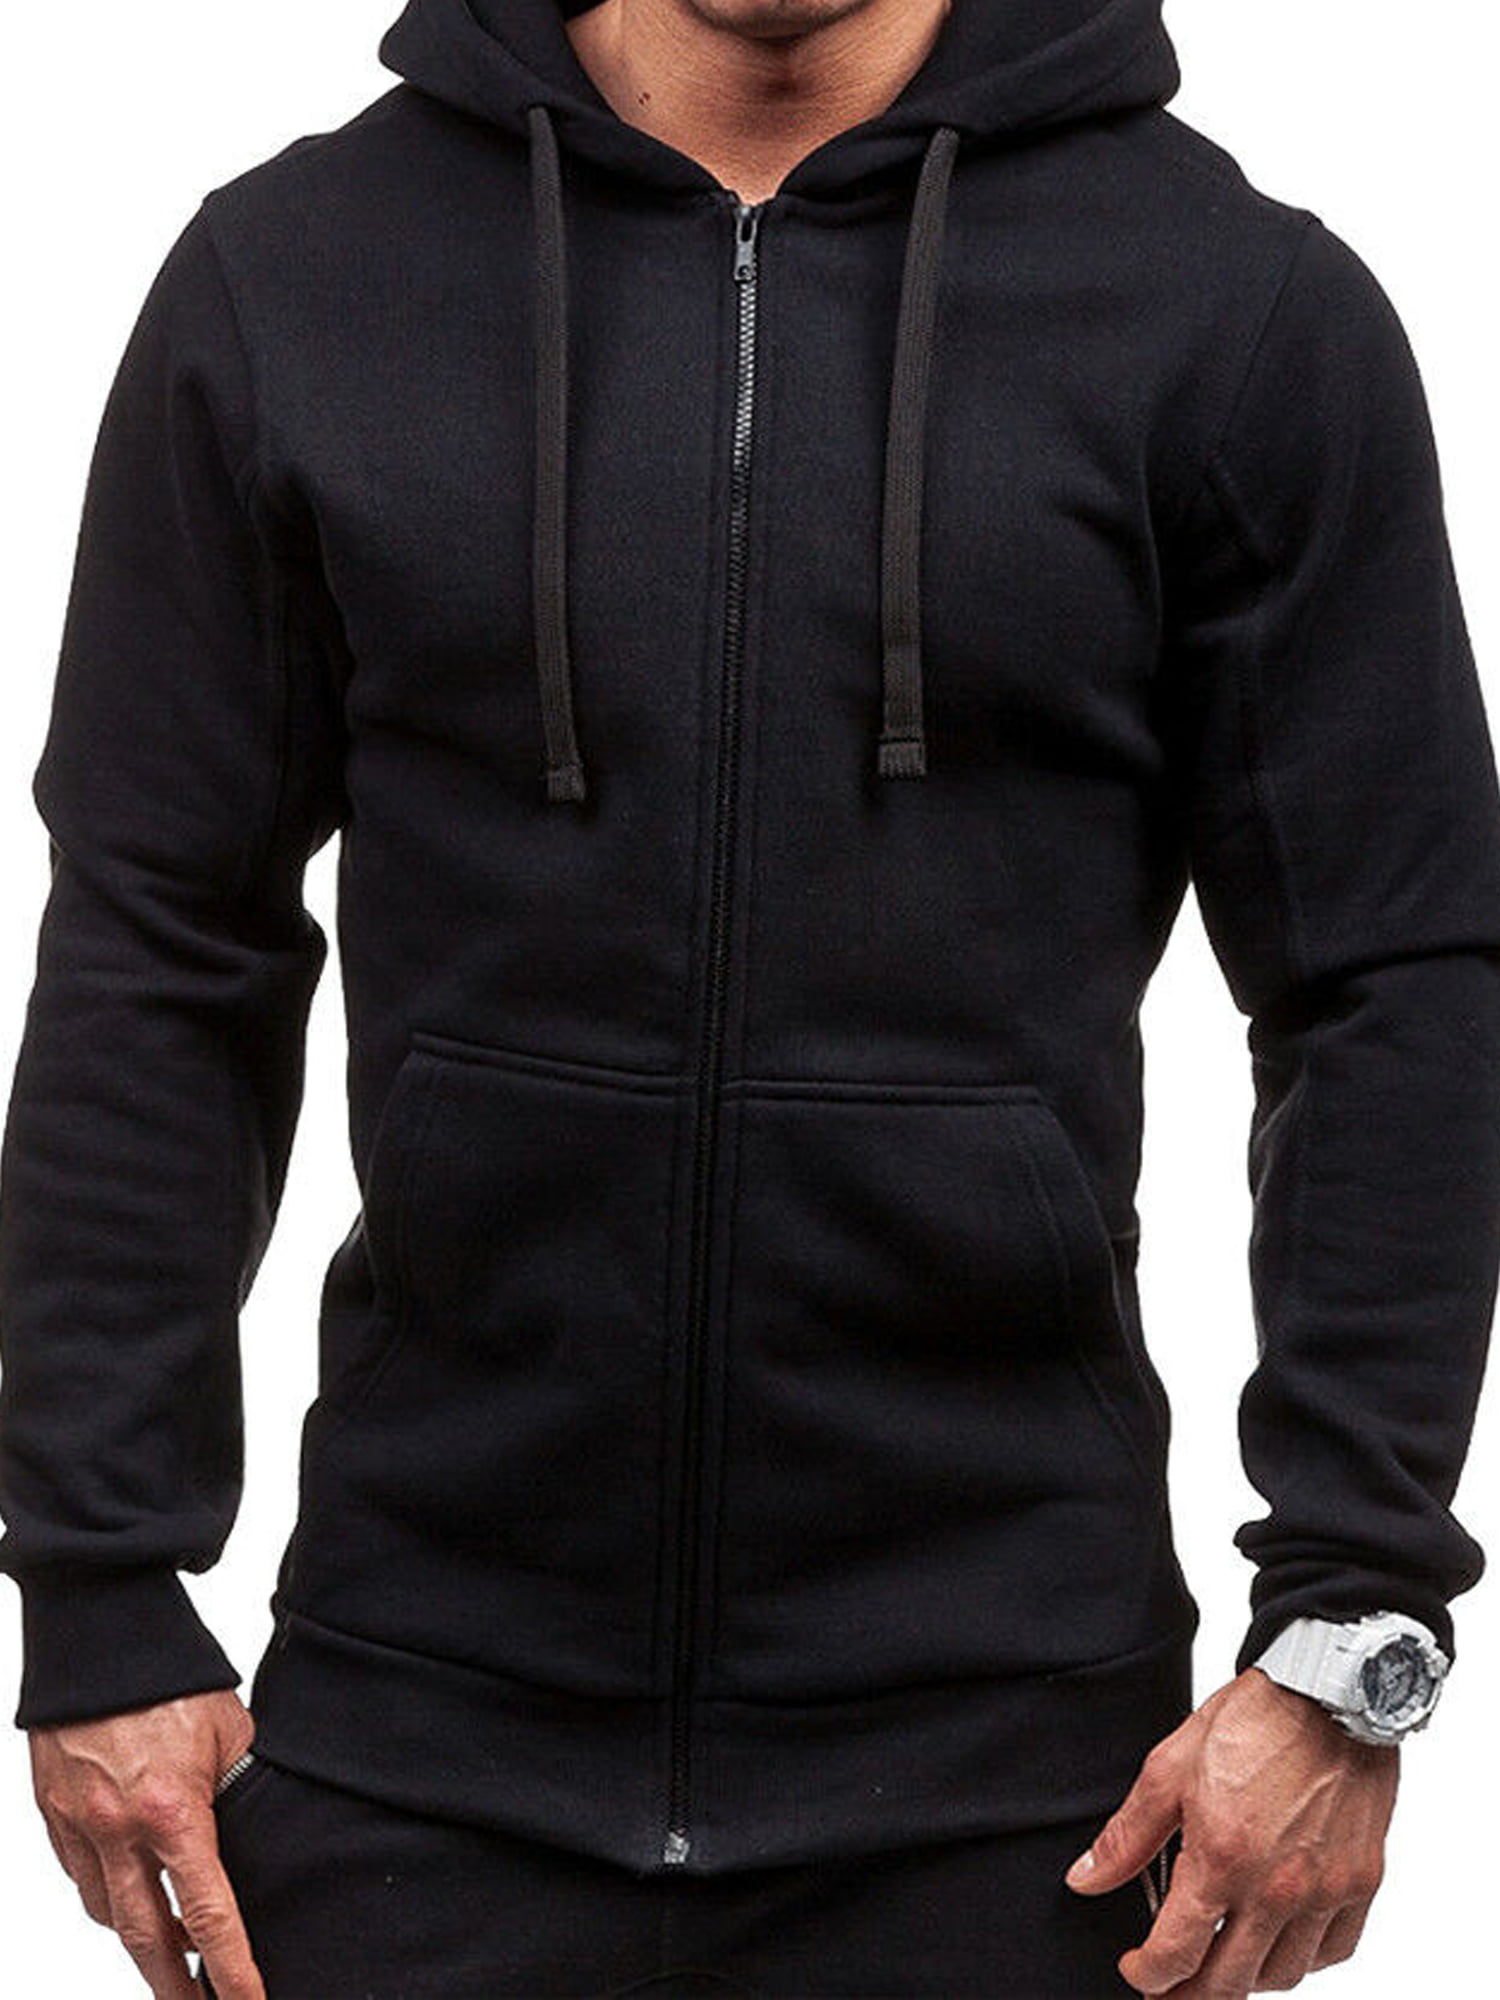 The latest subaru zip-up hoodie classic hooded sweatshirt jacket jacket top